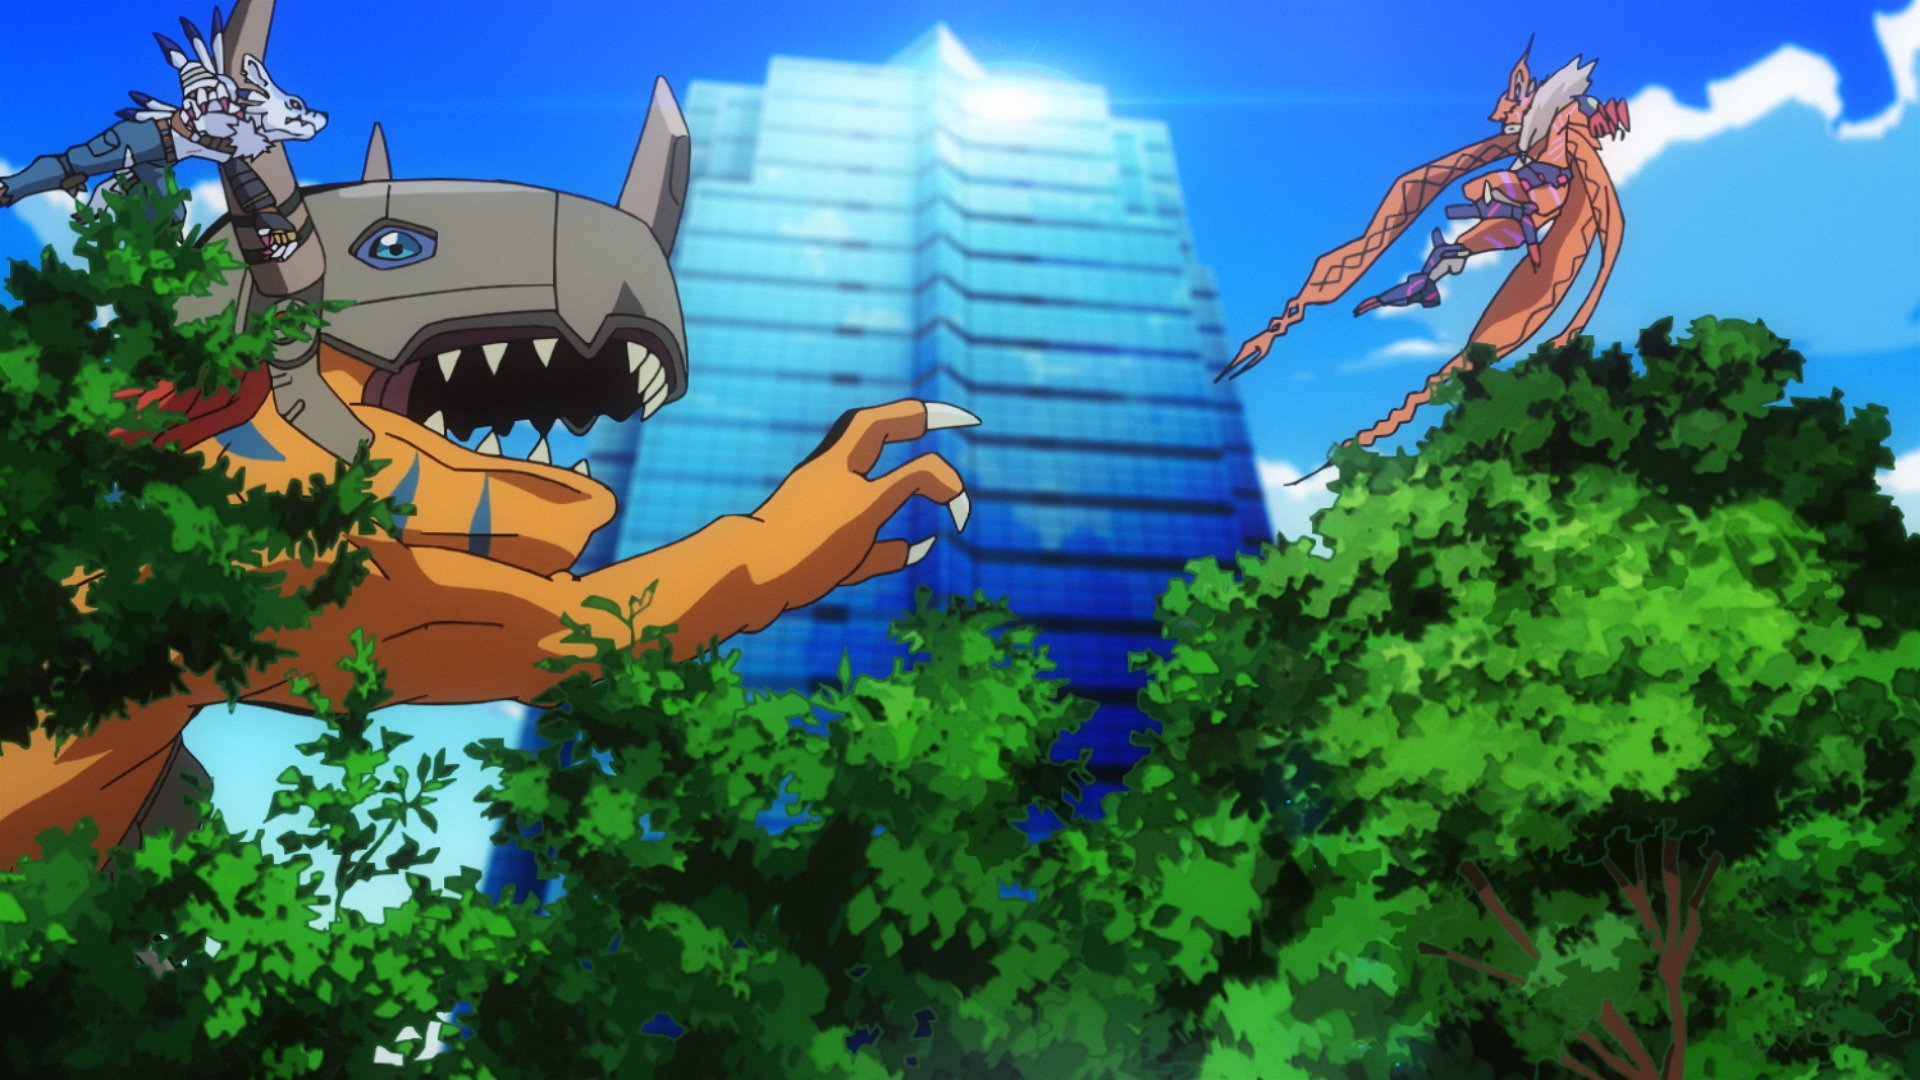 Digimon Adventure tri. 5: Kyousei (Digimon Adventure tri. Chapter 5:  Coexistance) · AniList